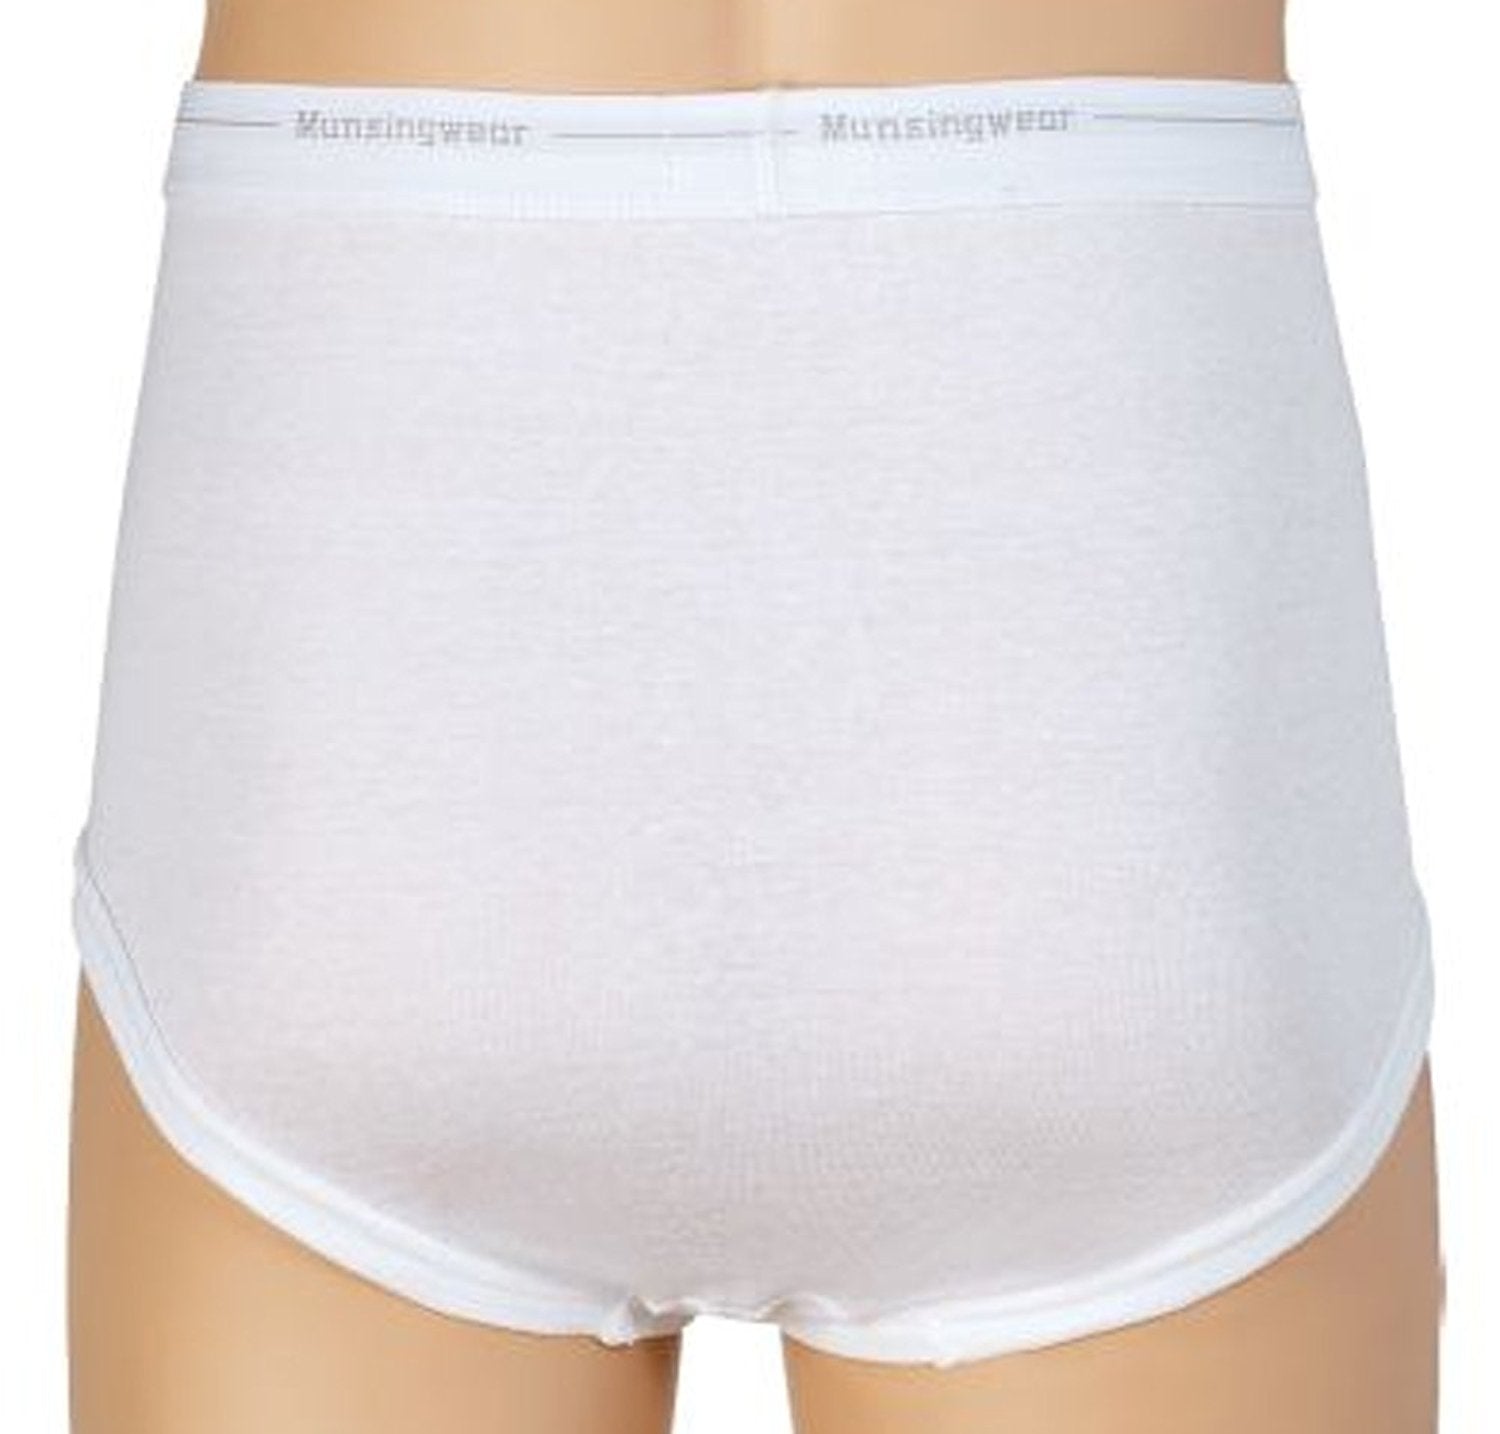 Hanes Ultimate® Men's Underwear Briefs Pack, Full-Rise, 100% Cotton, 7-Pack